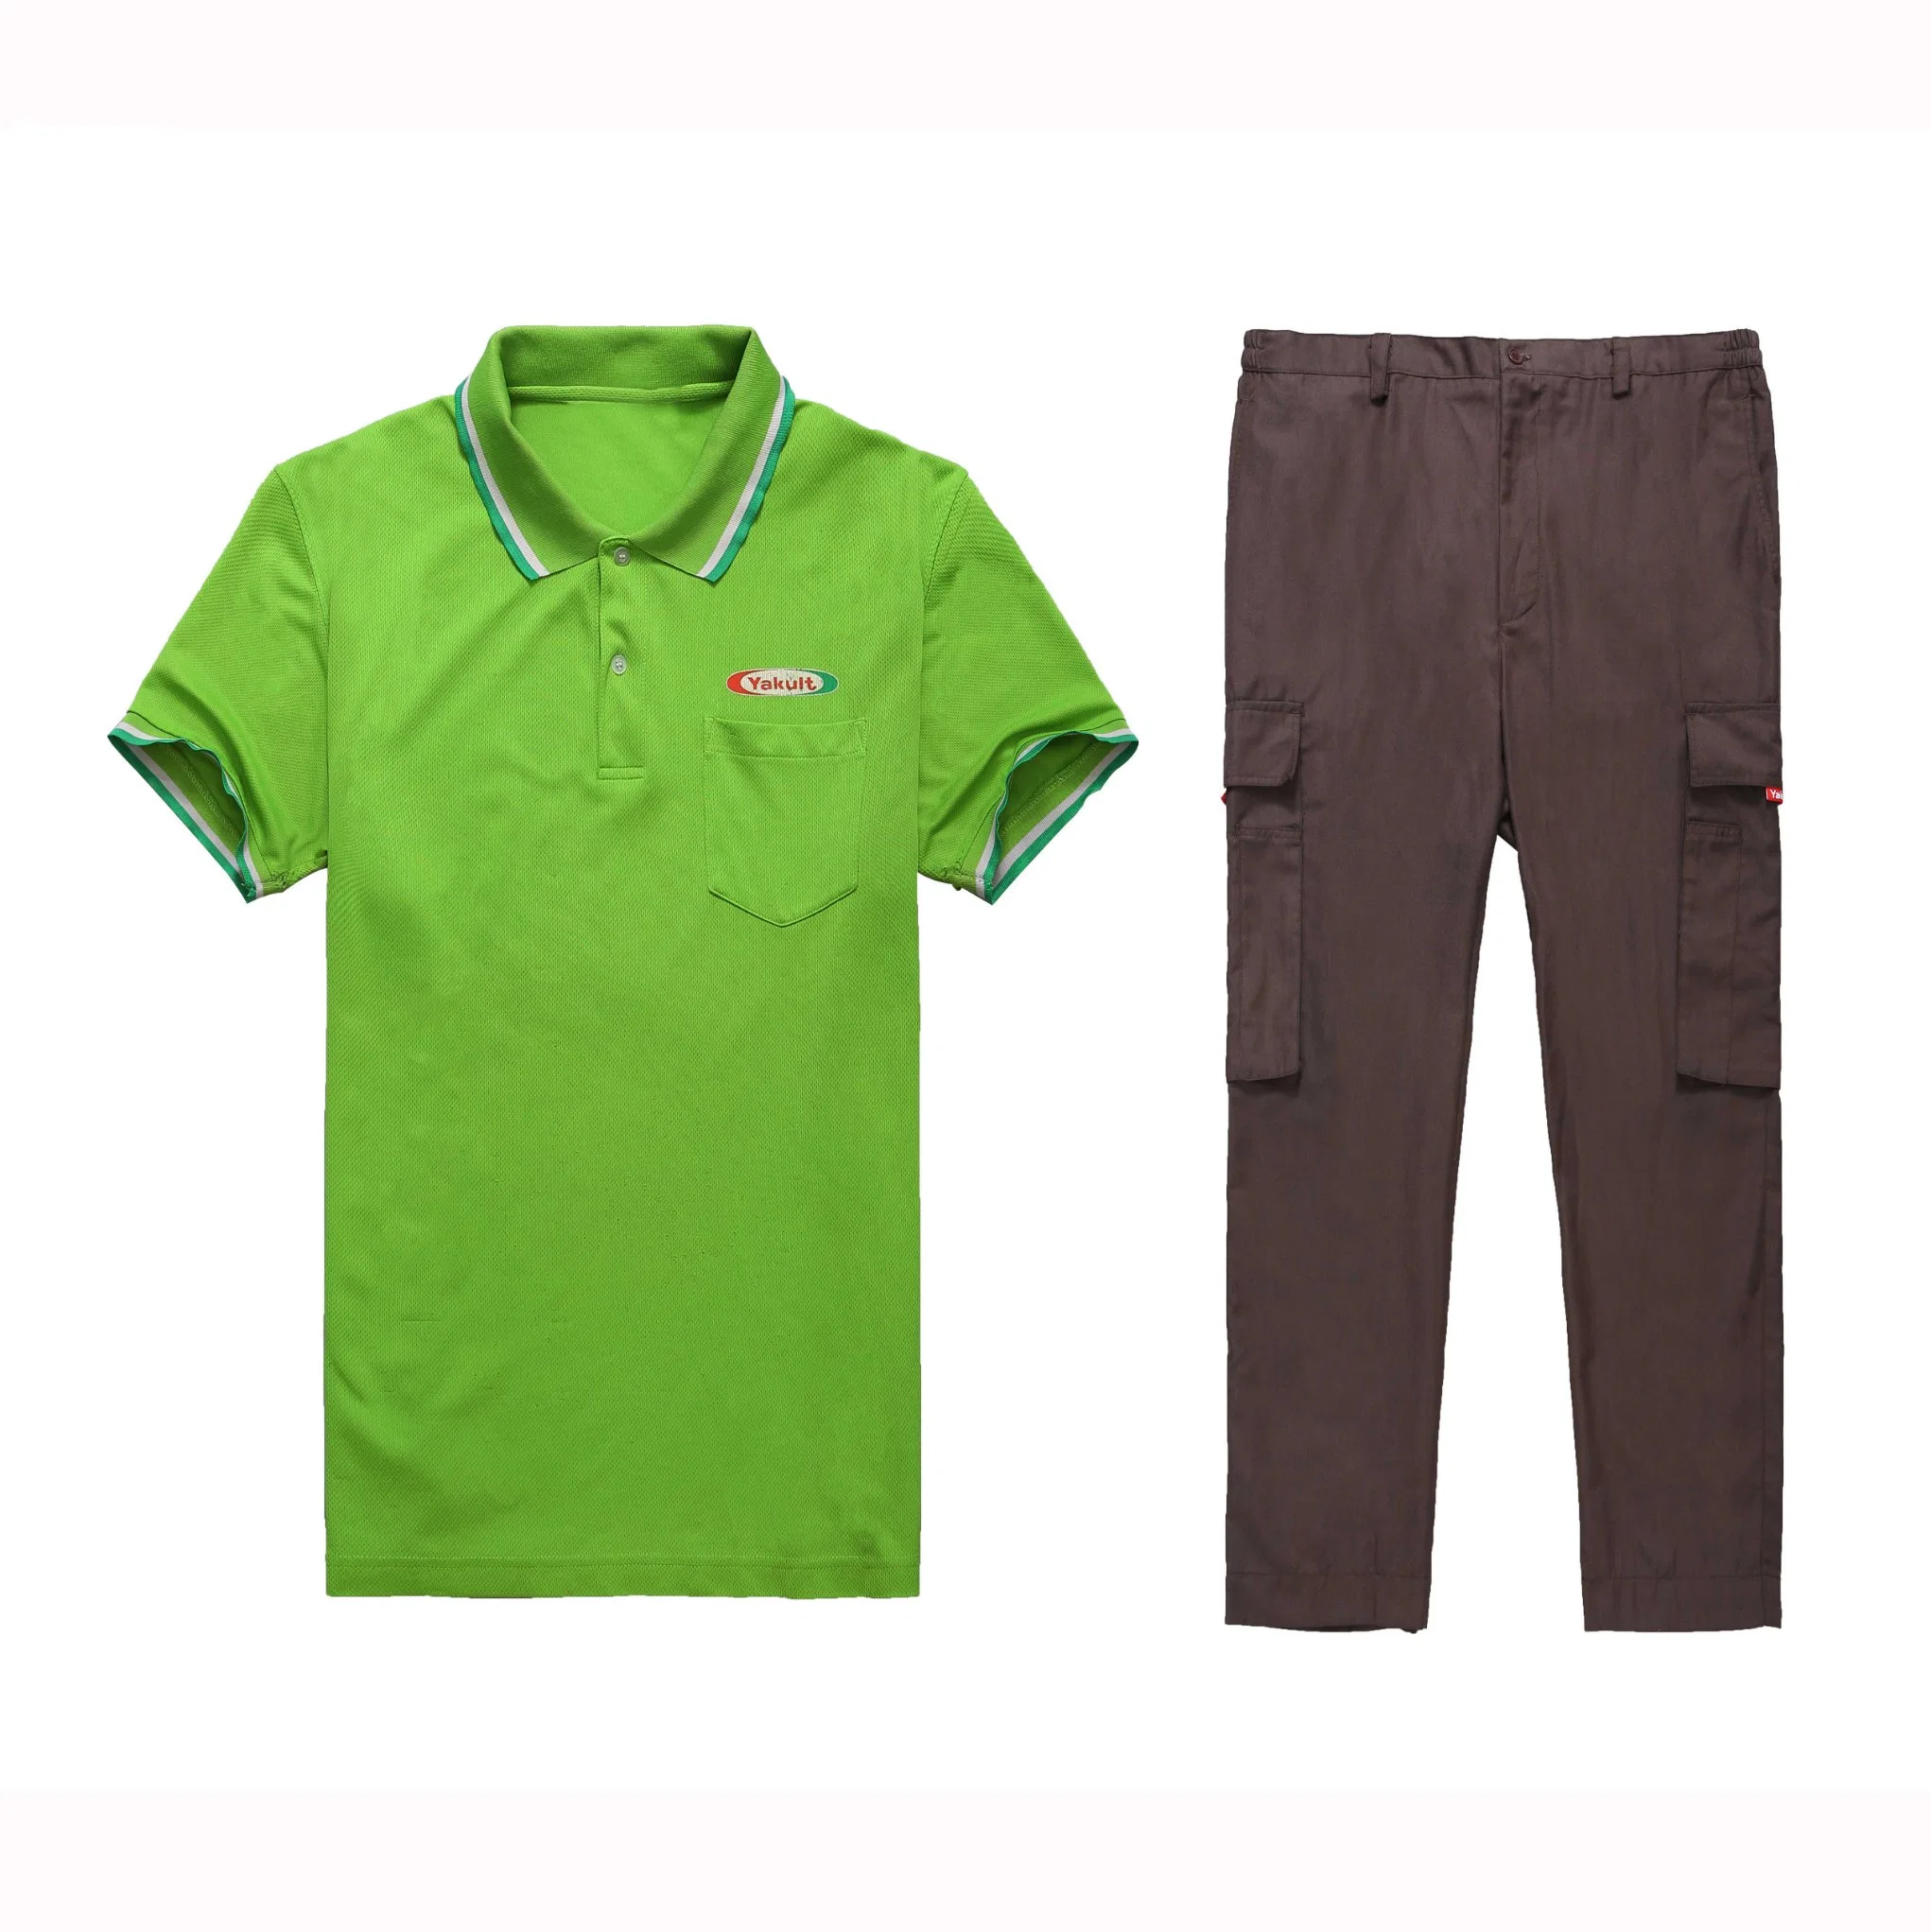 Summer Cheap Work Clothes Online Workwear Shopping Mall Uniform Polo Shirt Supermarket Uniform Clothes Workwear